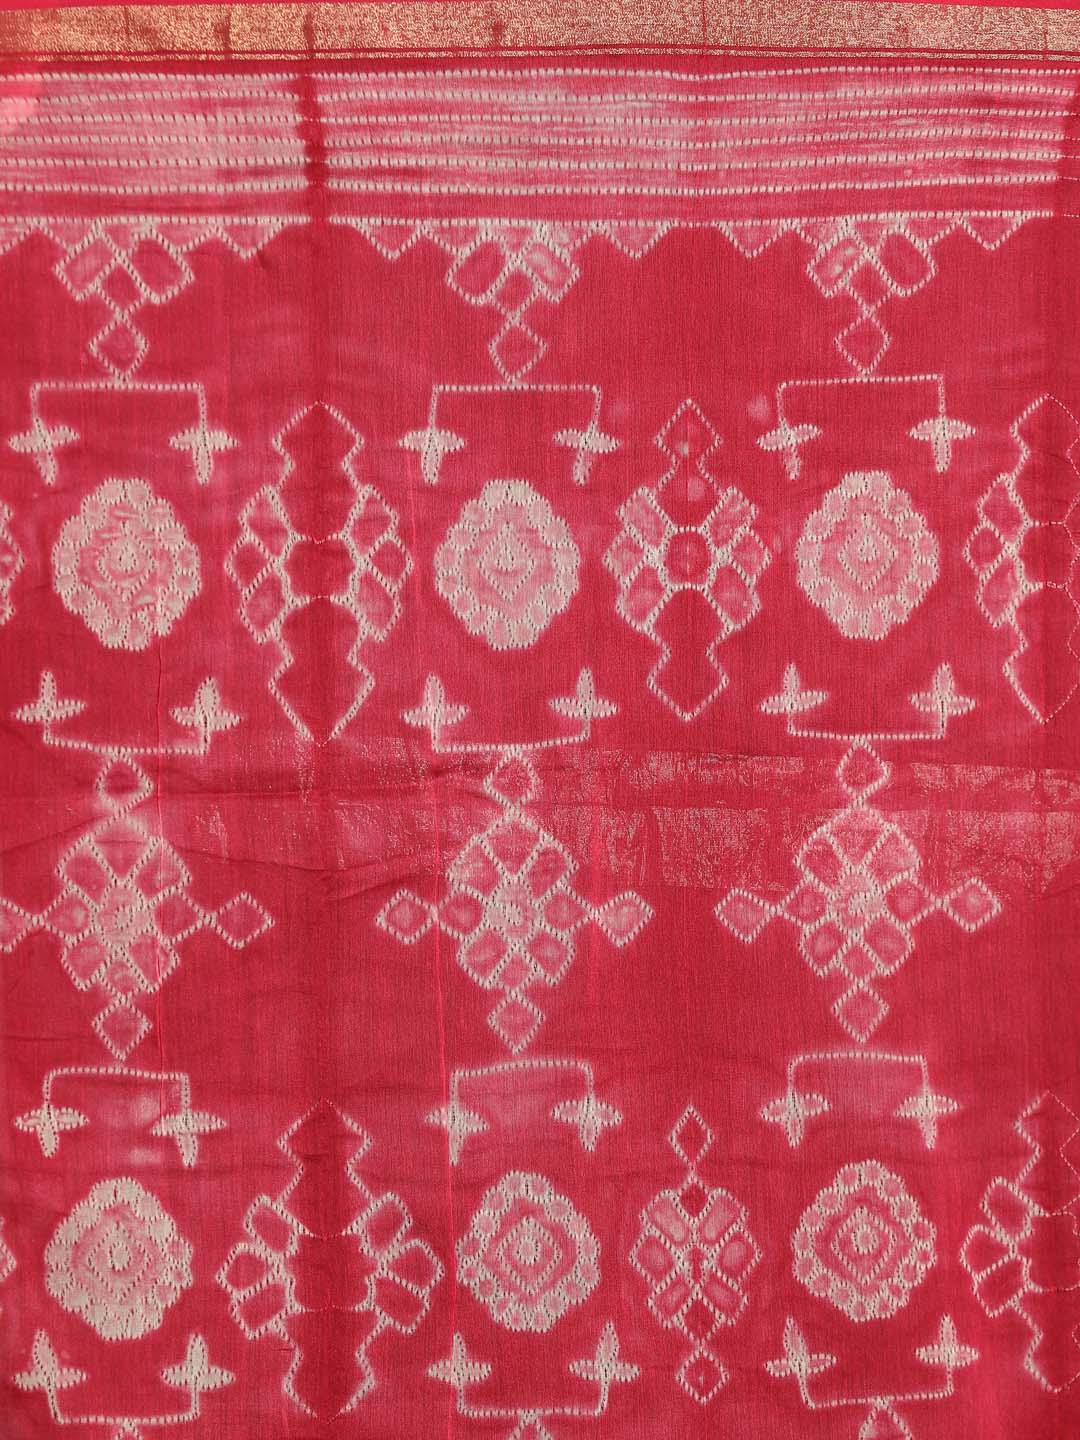 Indethnic Shibori Silk Cotton Saree in Pink - Saree Detail View